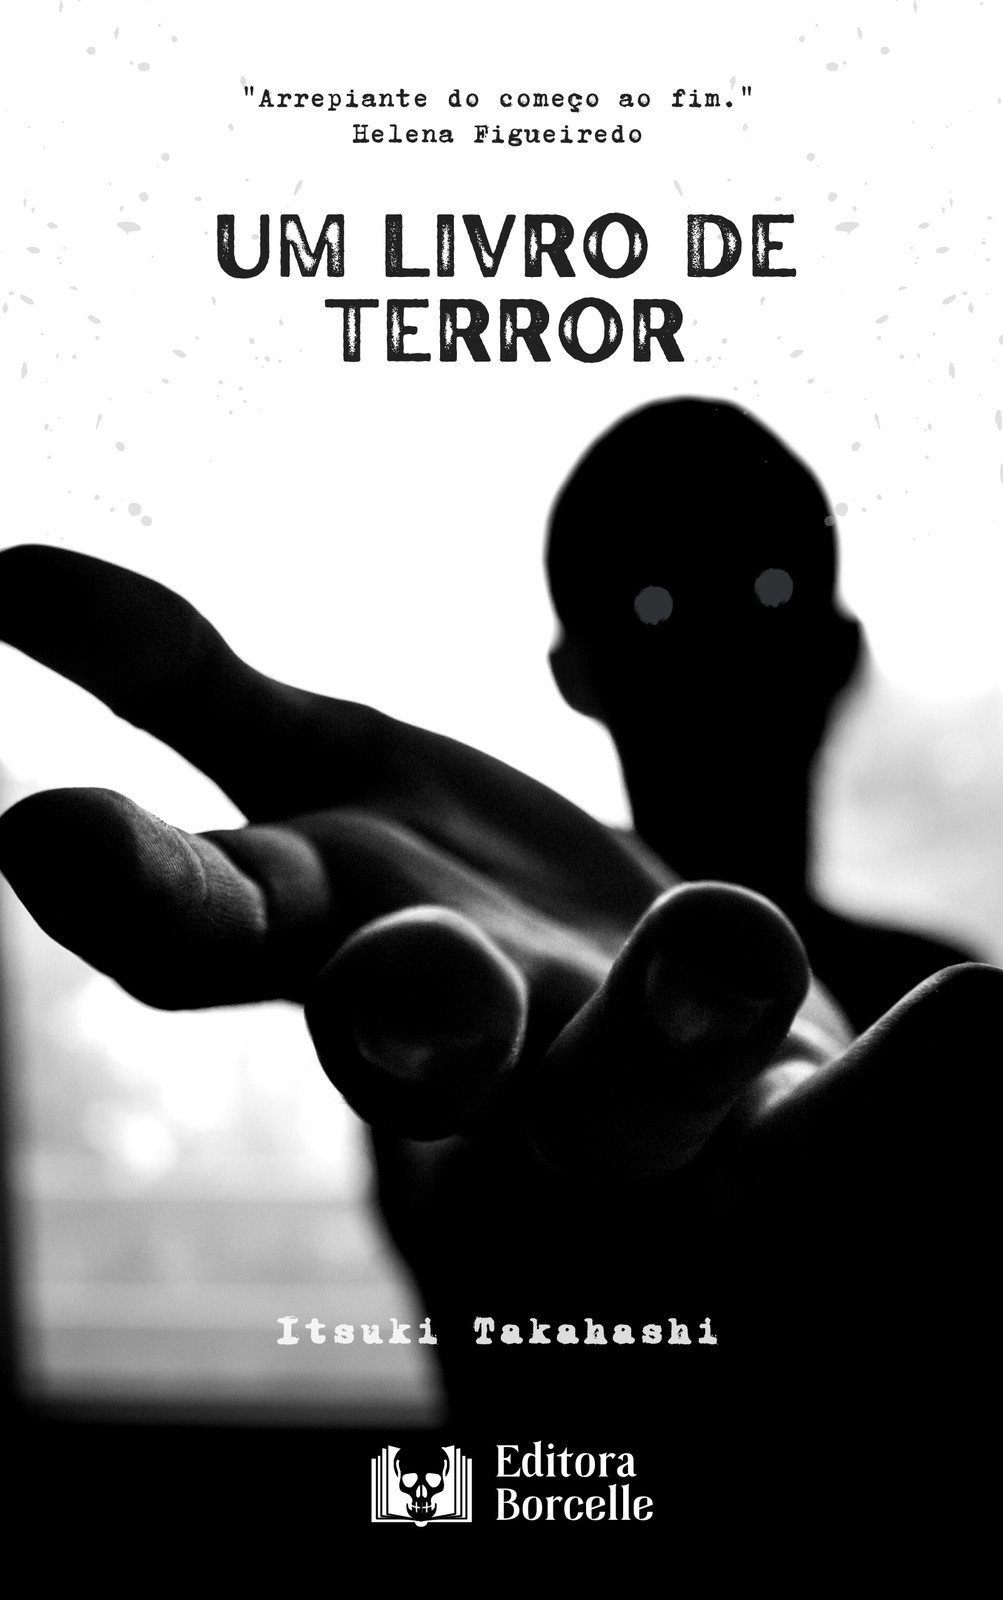 Efeito de estilo de texto 3d de filme de terror e jogo